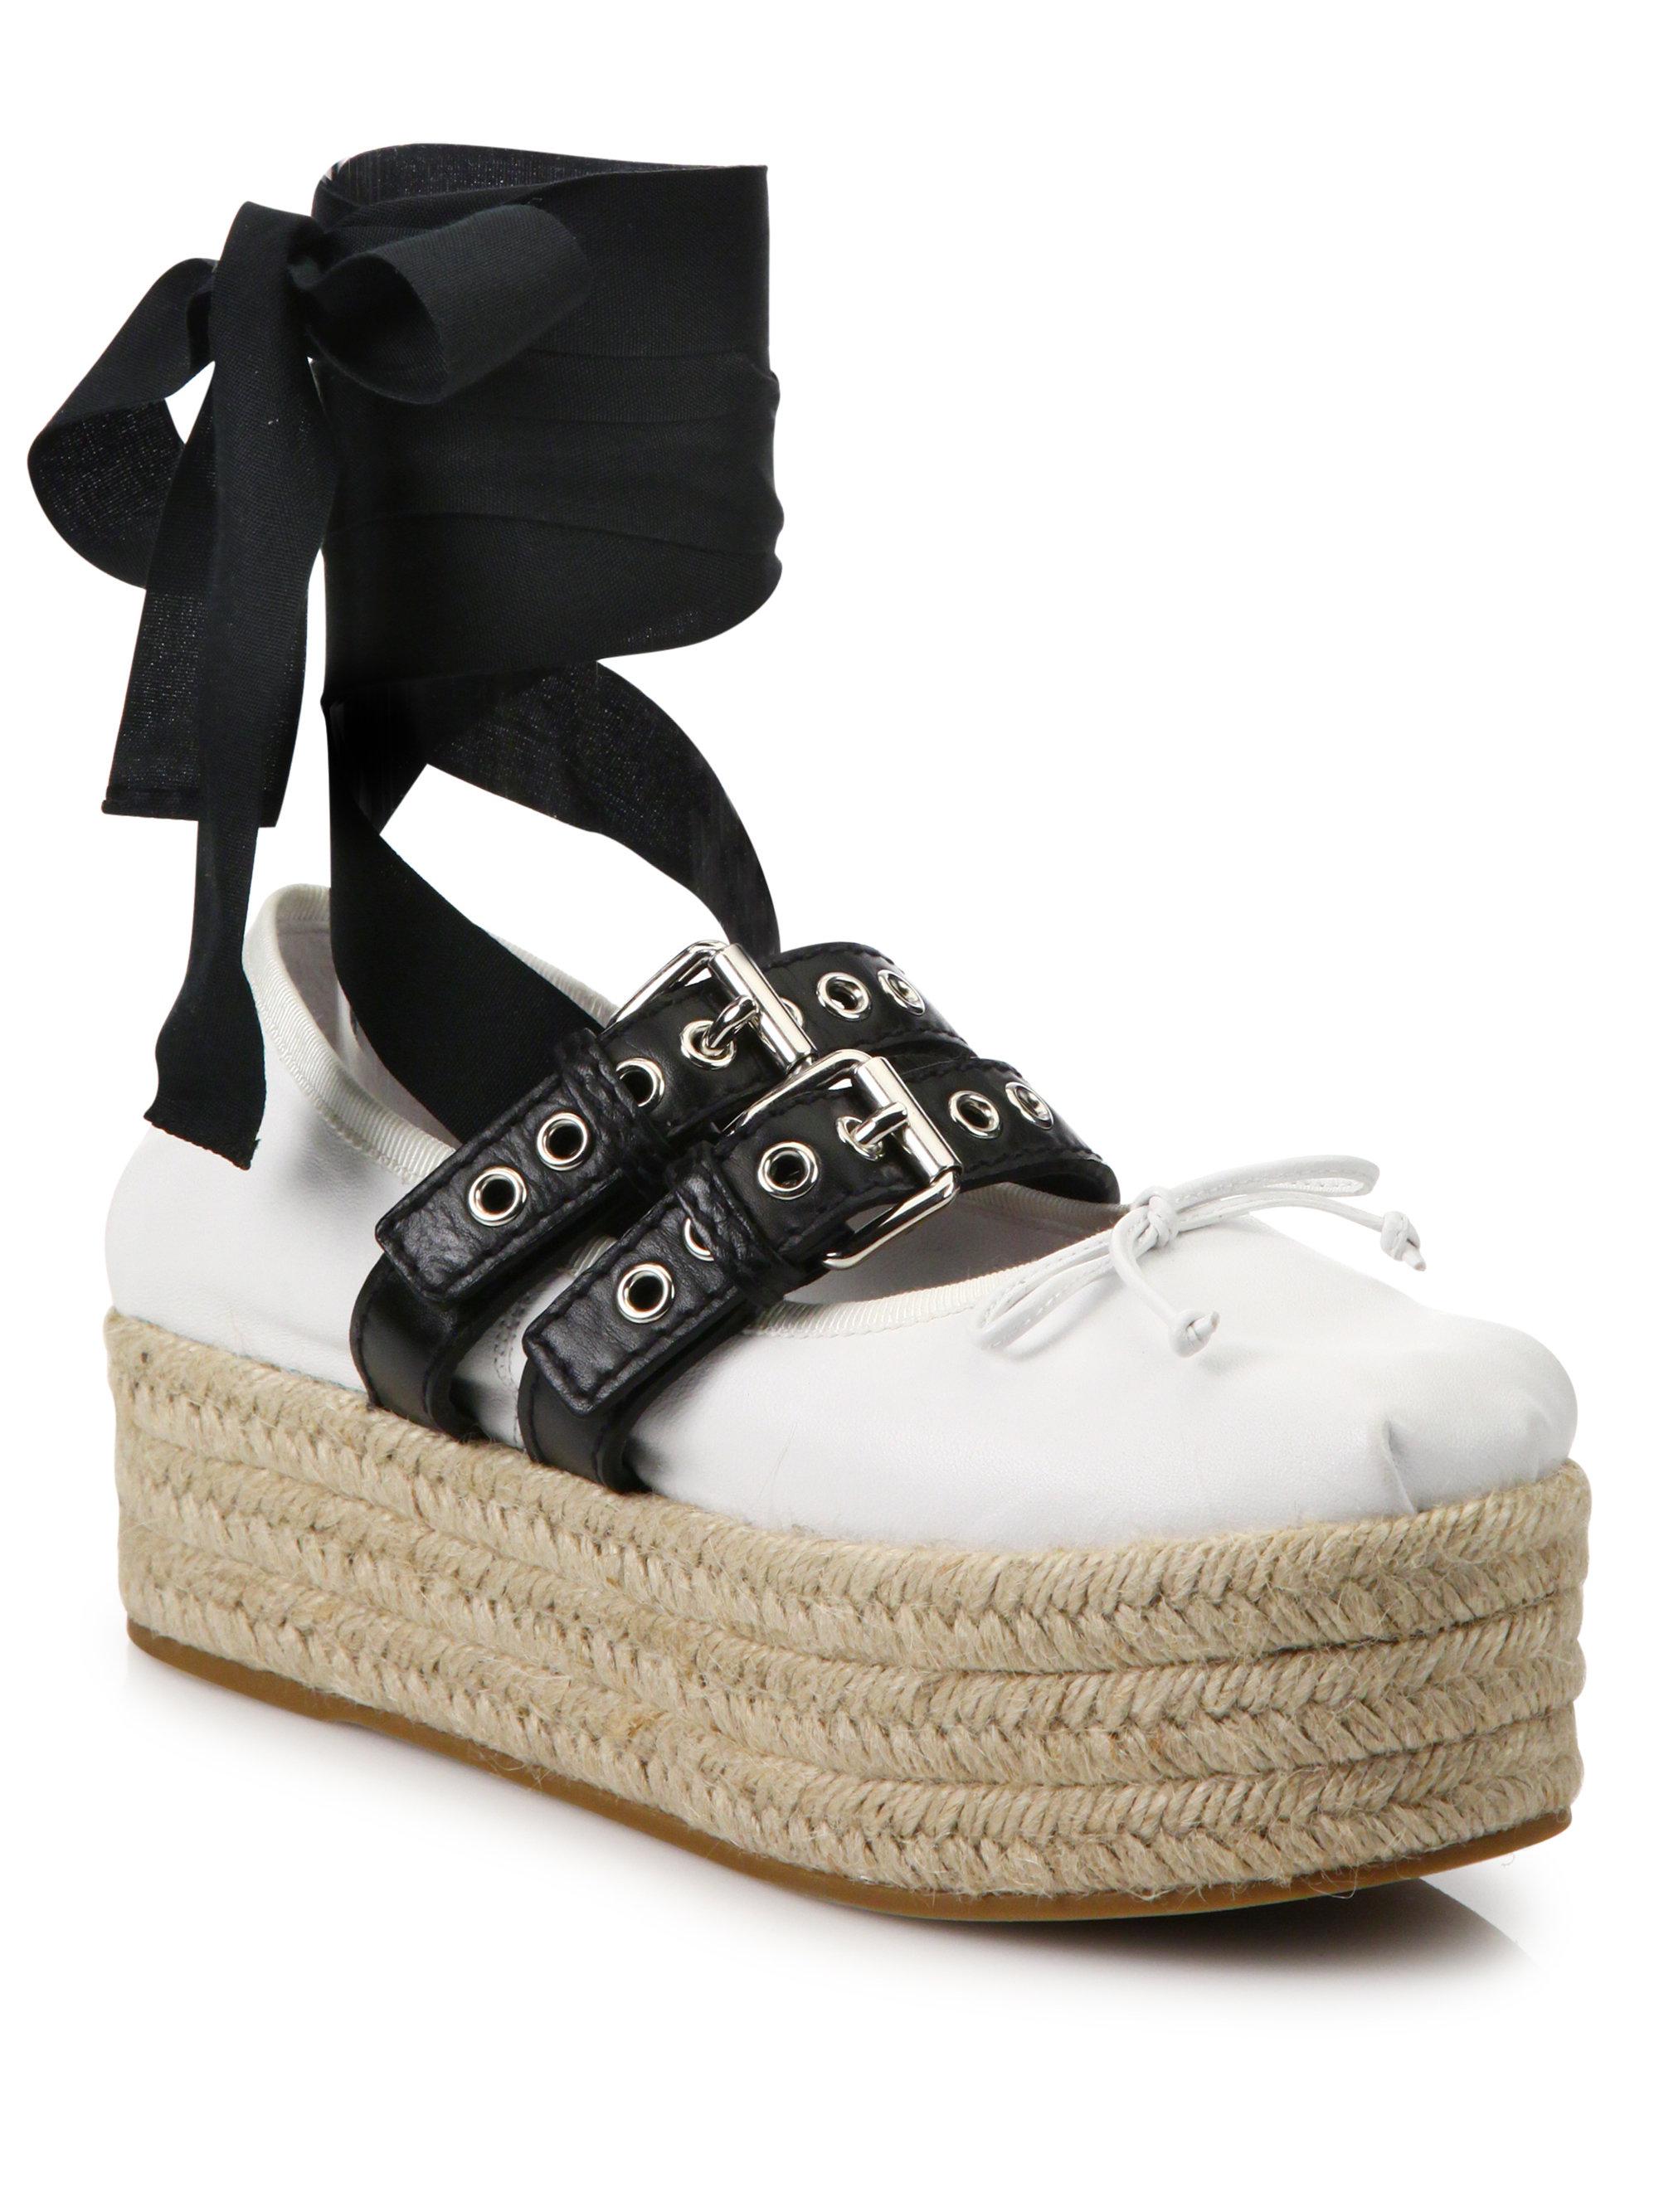 Miu Miu Leather Lace-up Platform Espadrille Ballet Flats in Black | Lyst